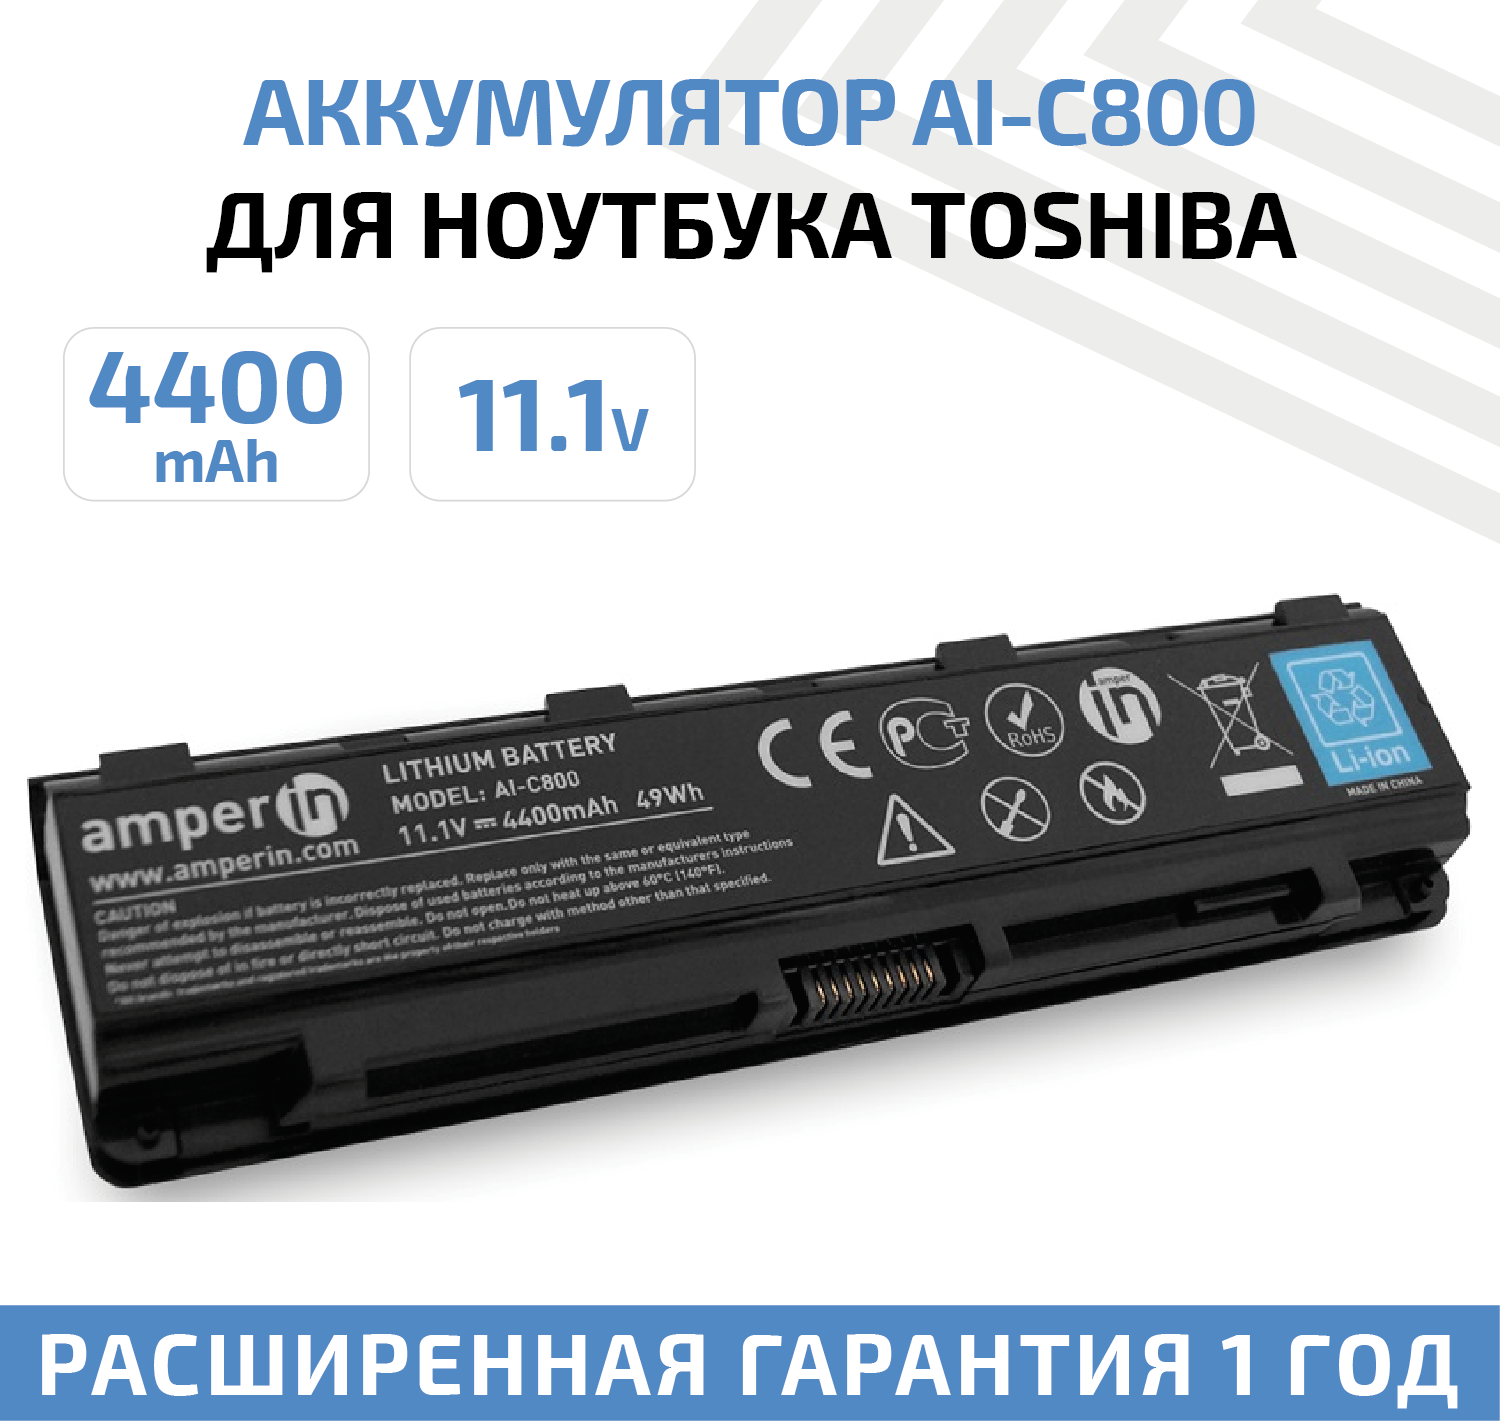 Аккумулятор (АКБ, аккумуляторная батарея) Amperin AI-C800 для ноутбука Toshiba Satellite C800, 11.1В, 4400мАч, 49Вт, Li-Ion, черный